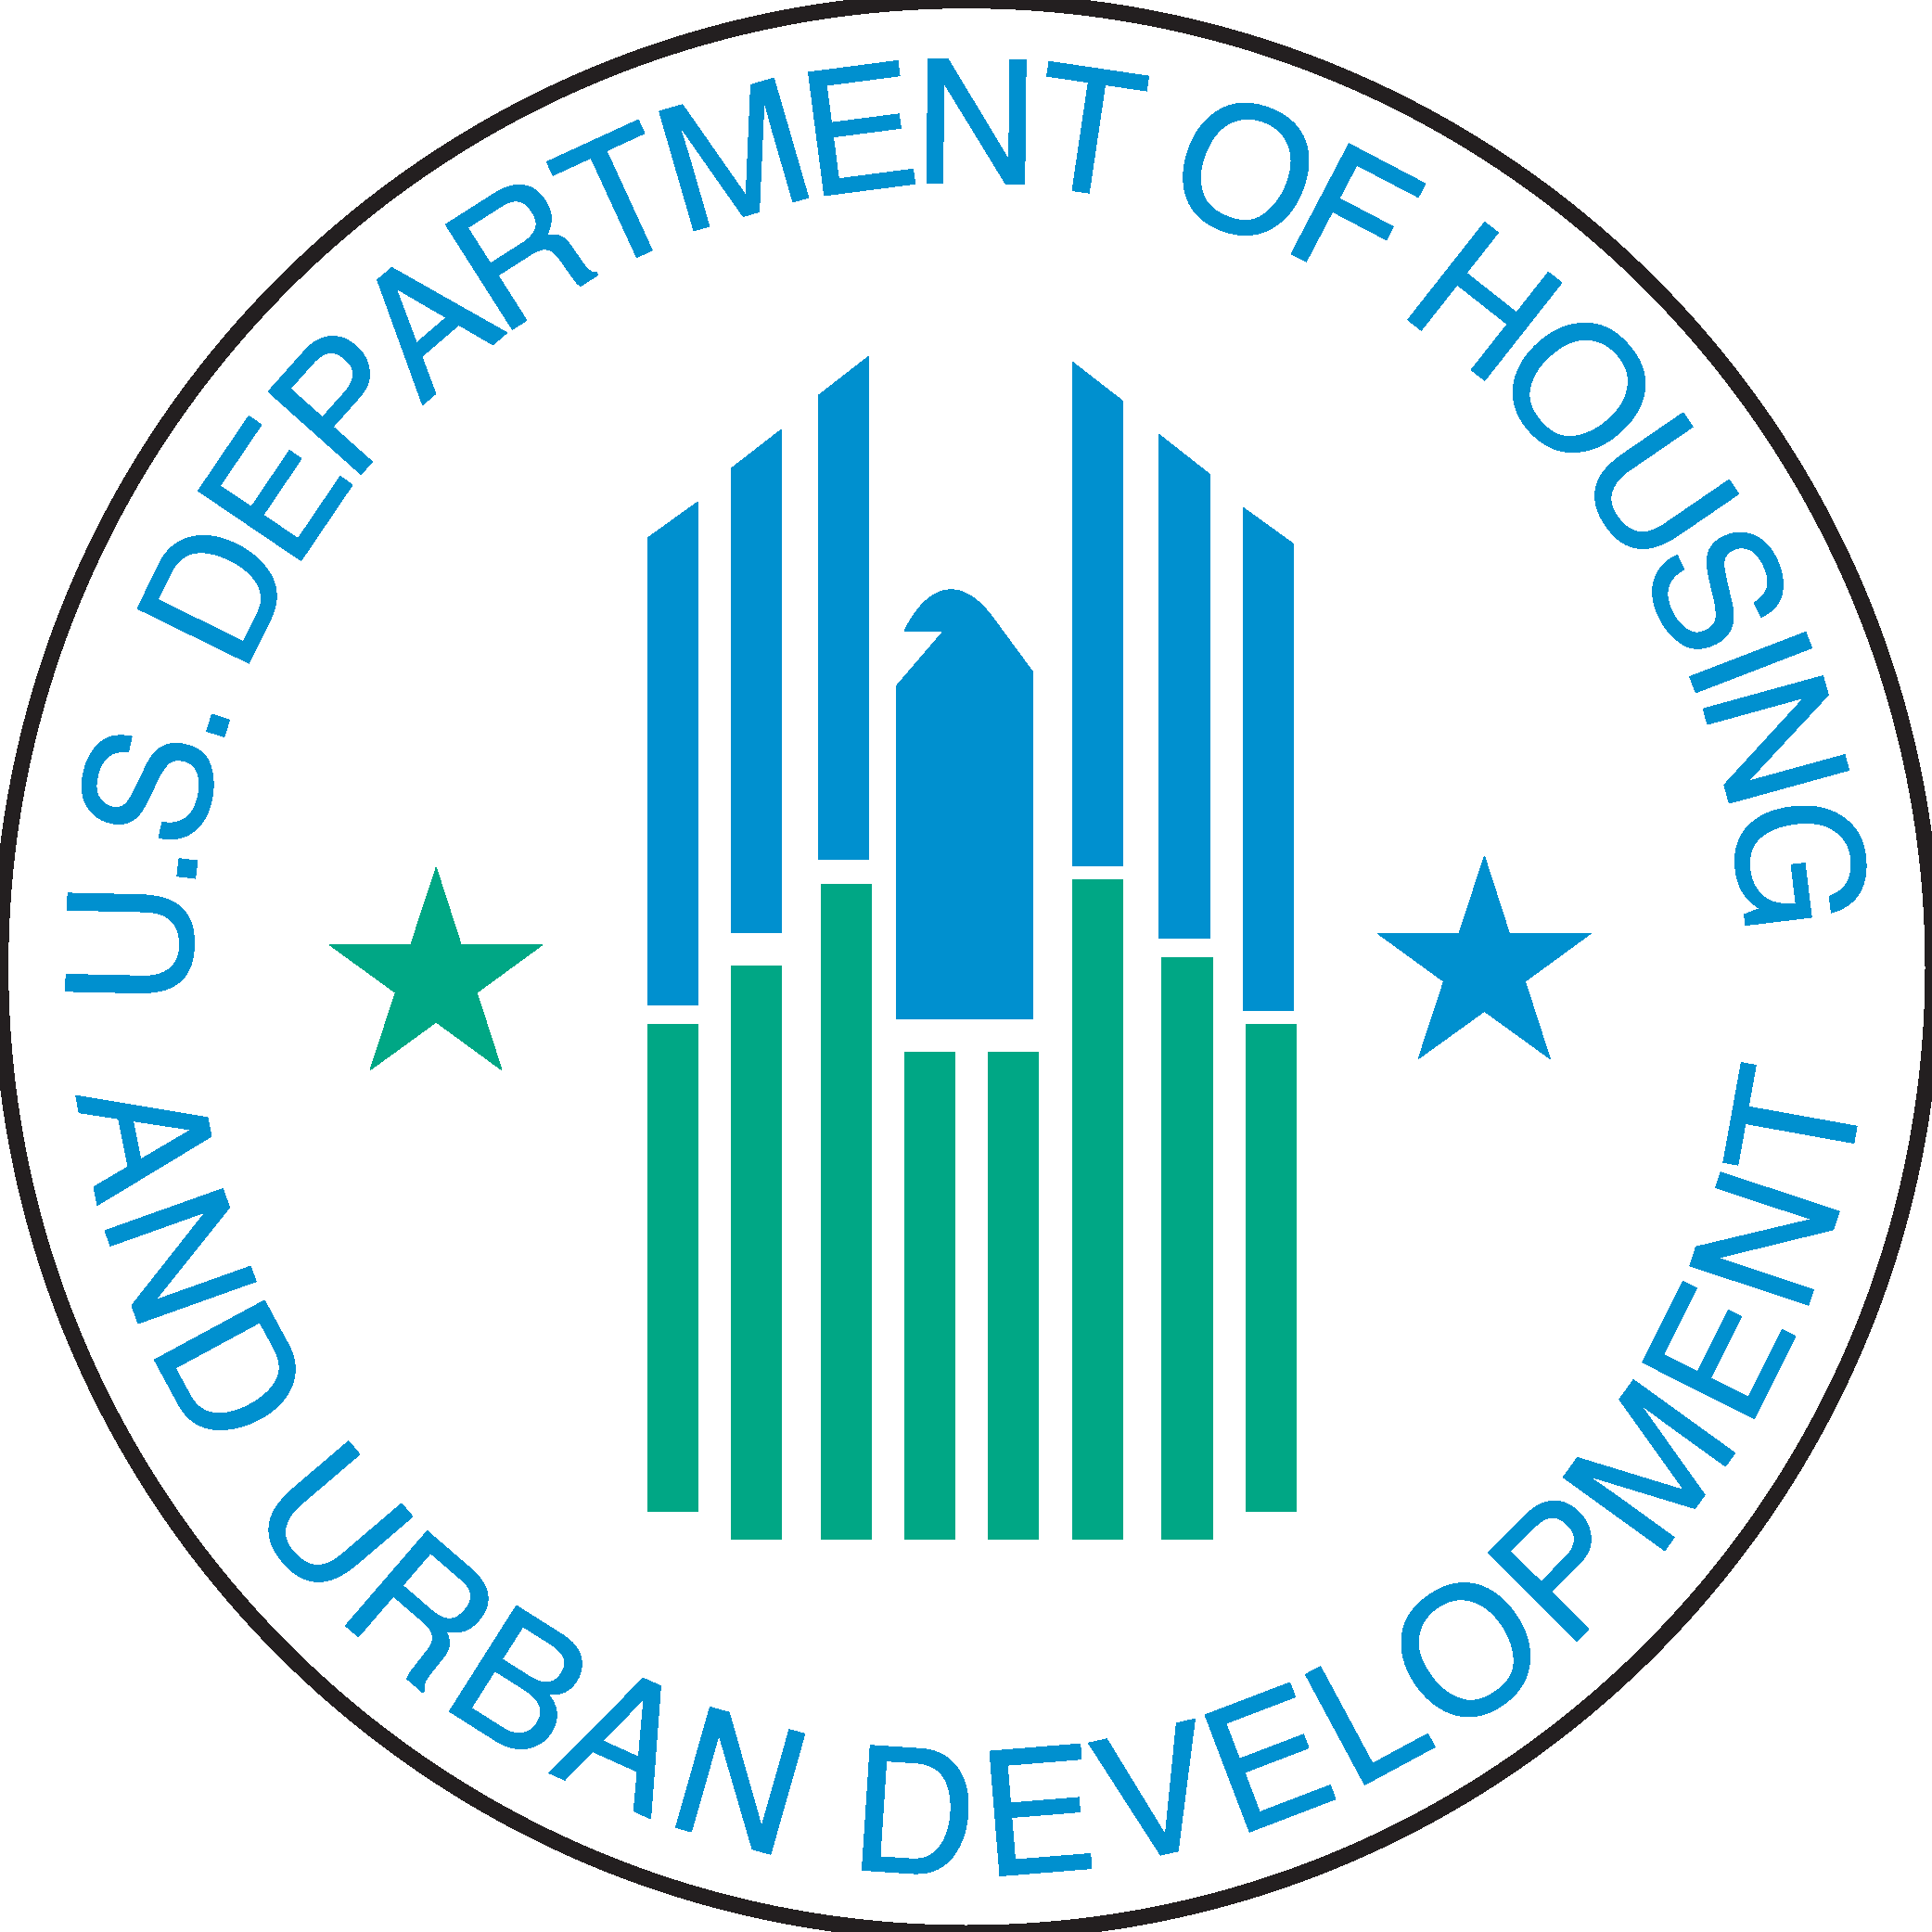 Department of Housing and urban development